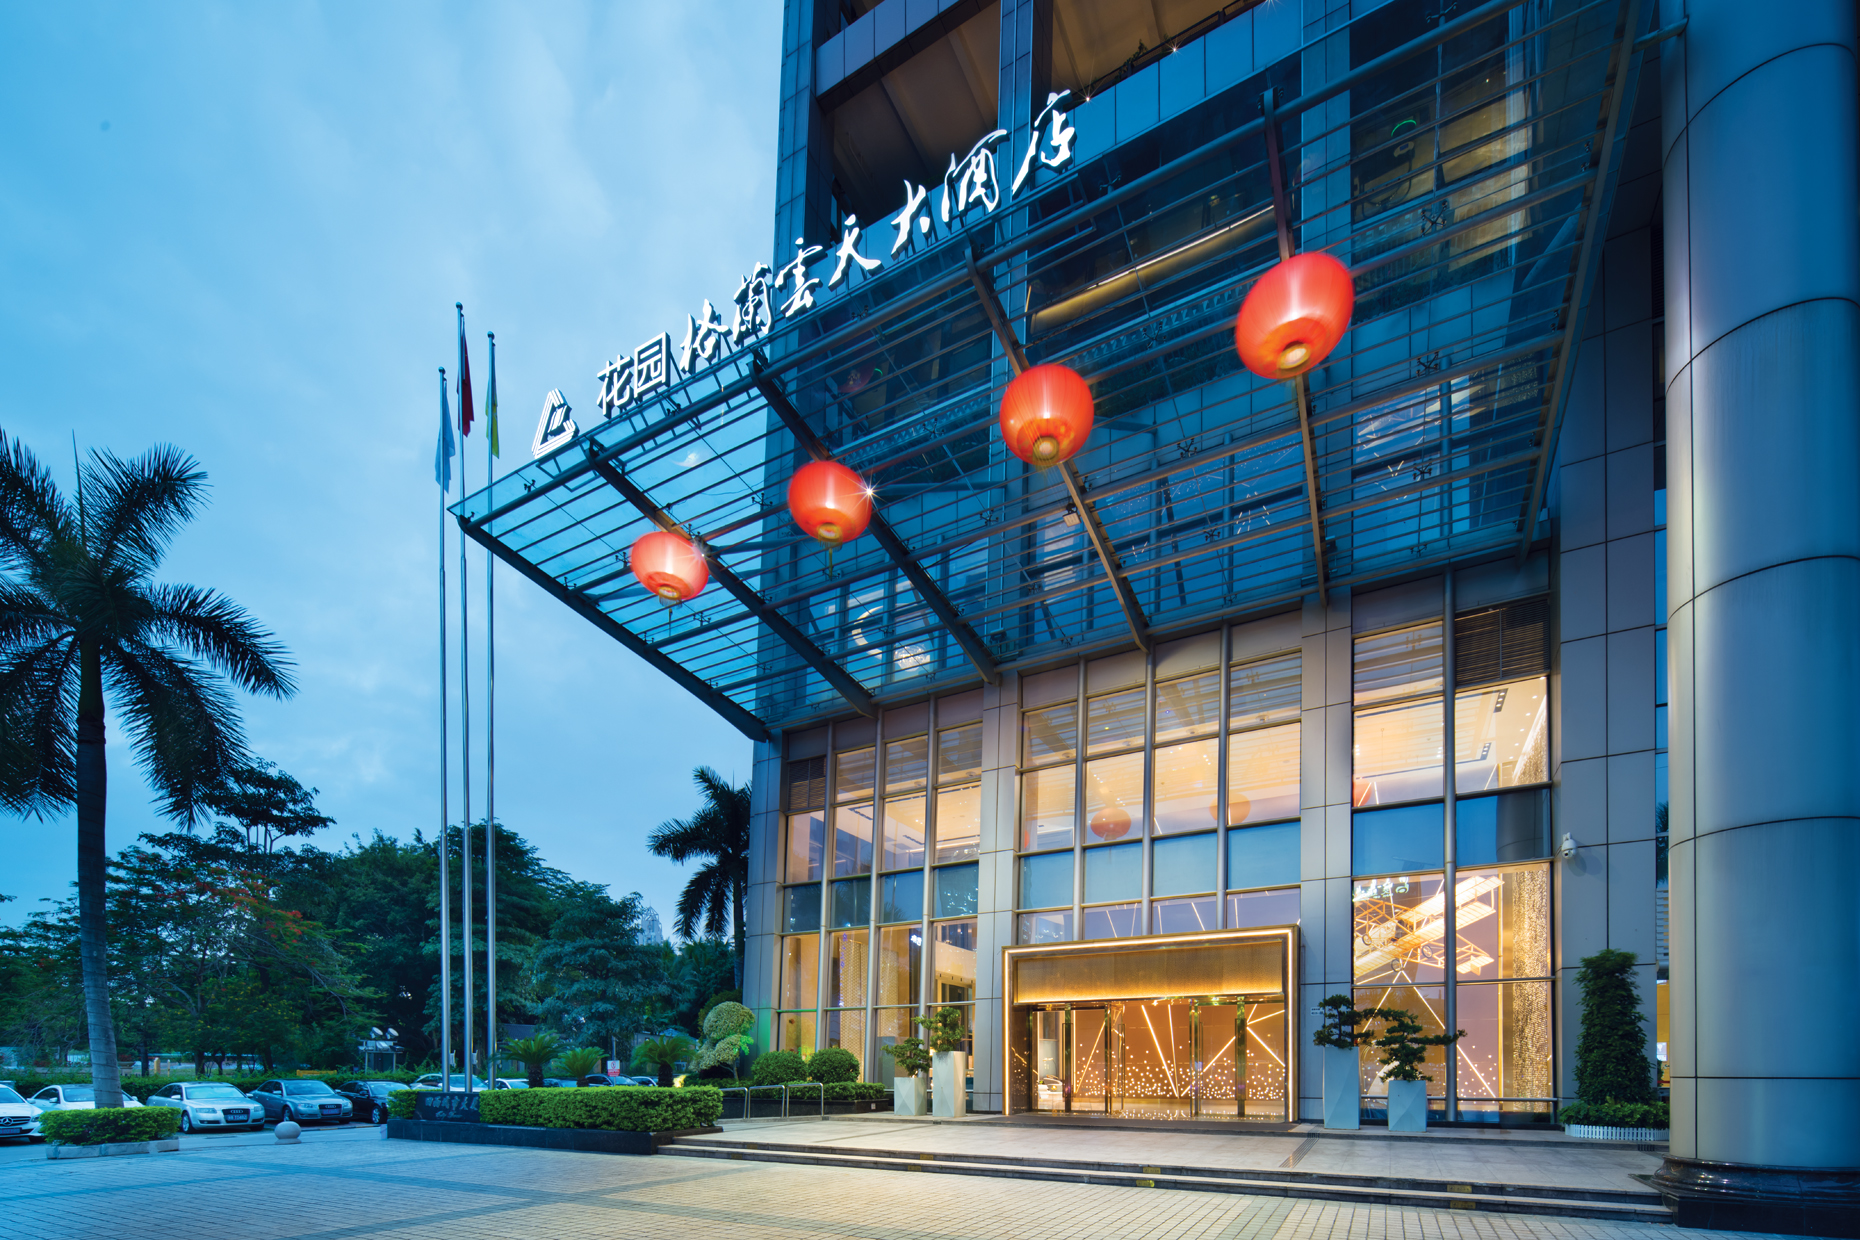 Grand Skylight Garden Hotel Shenzhen Tianmian City Building image